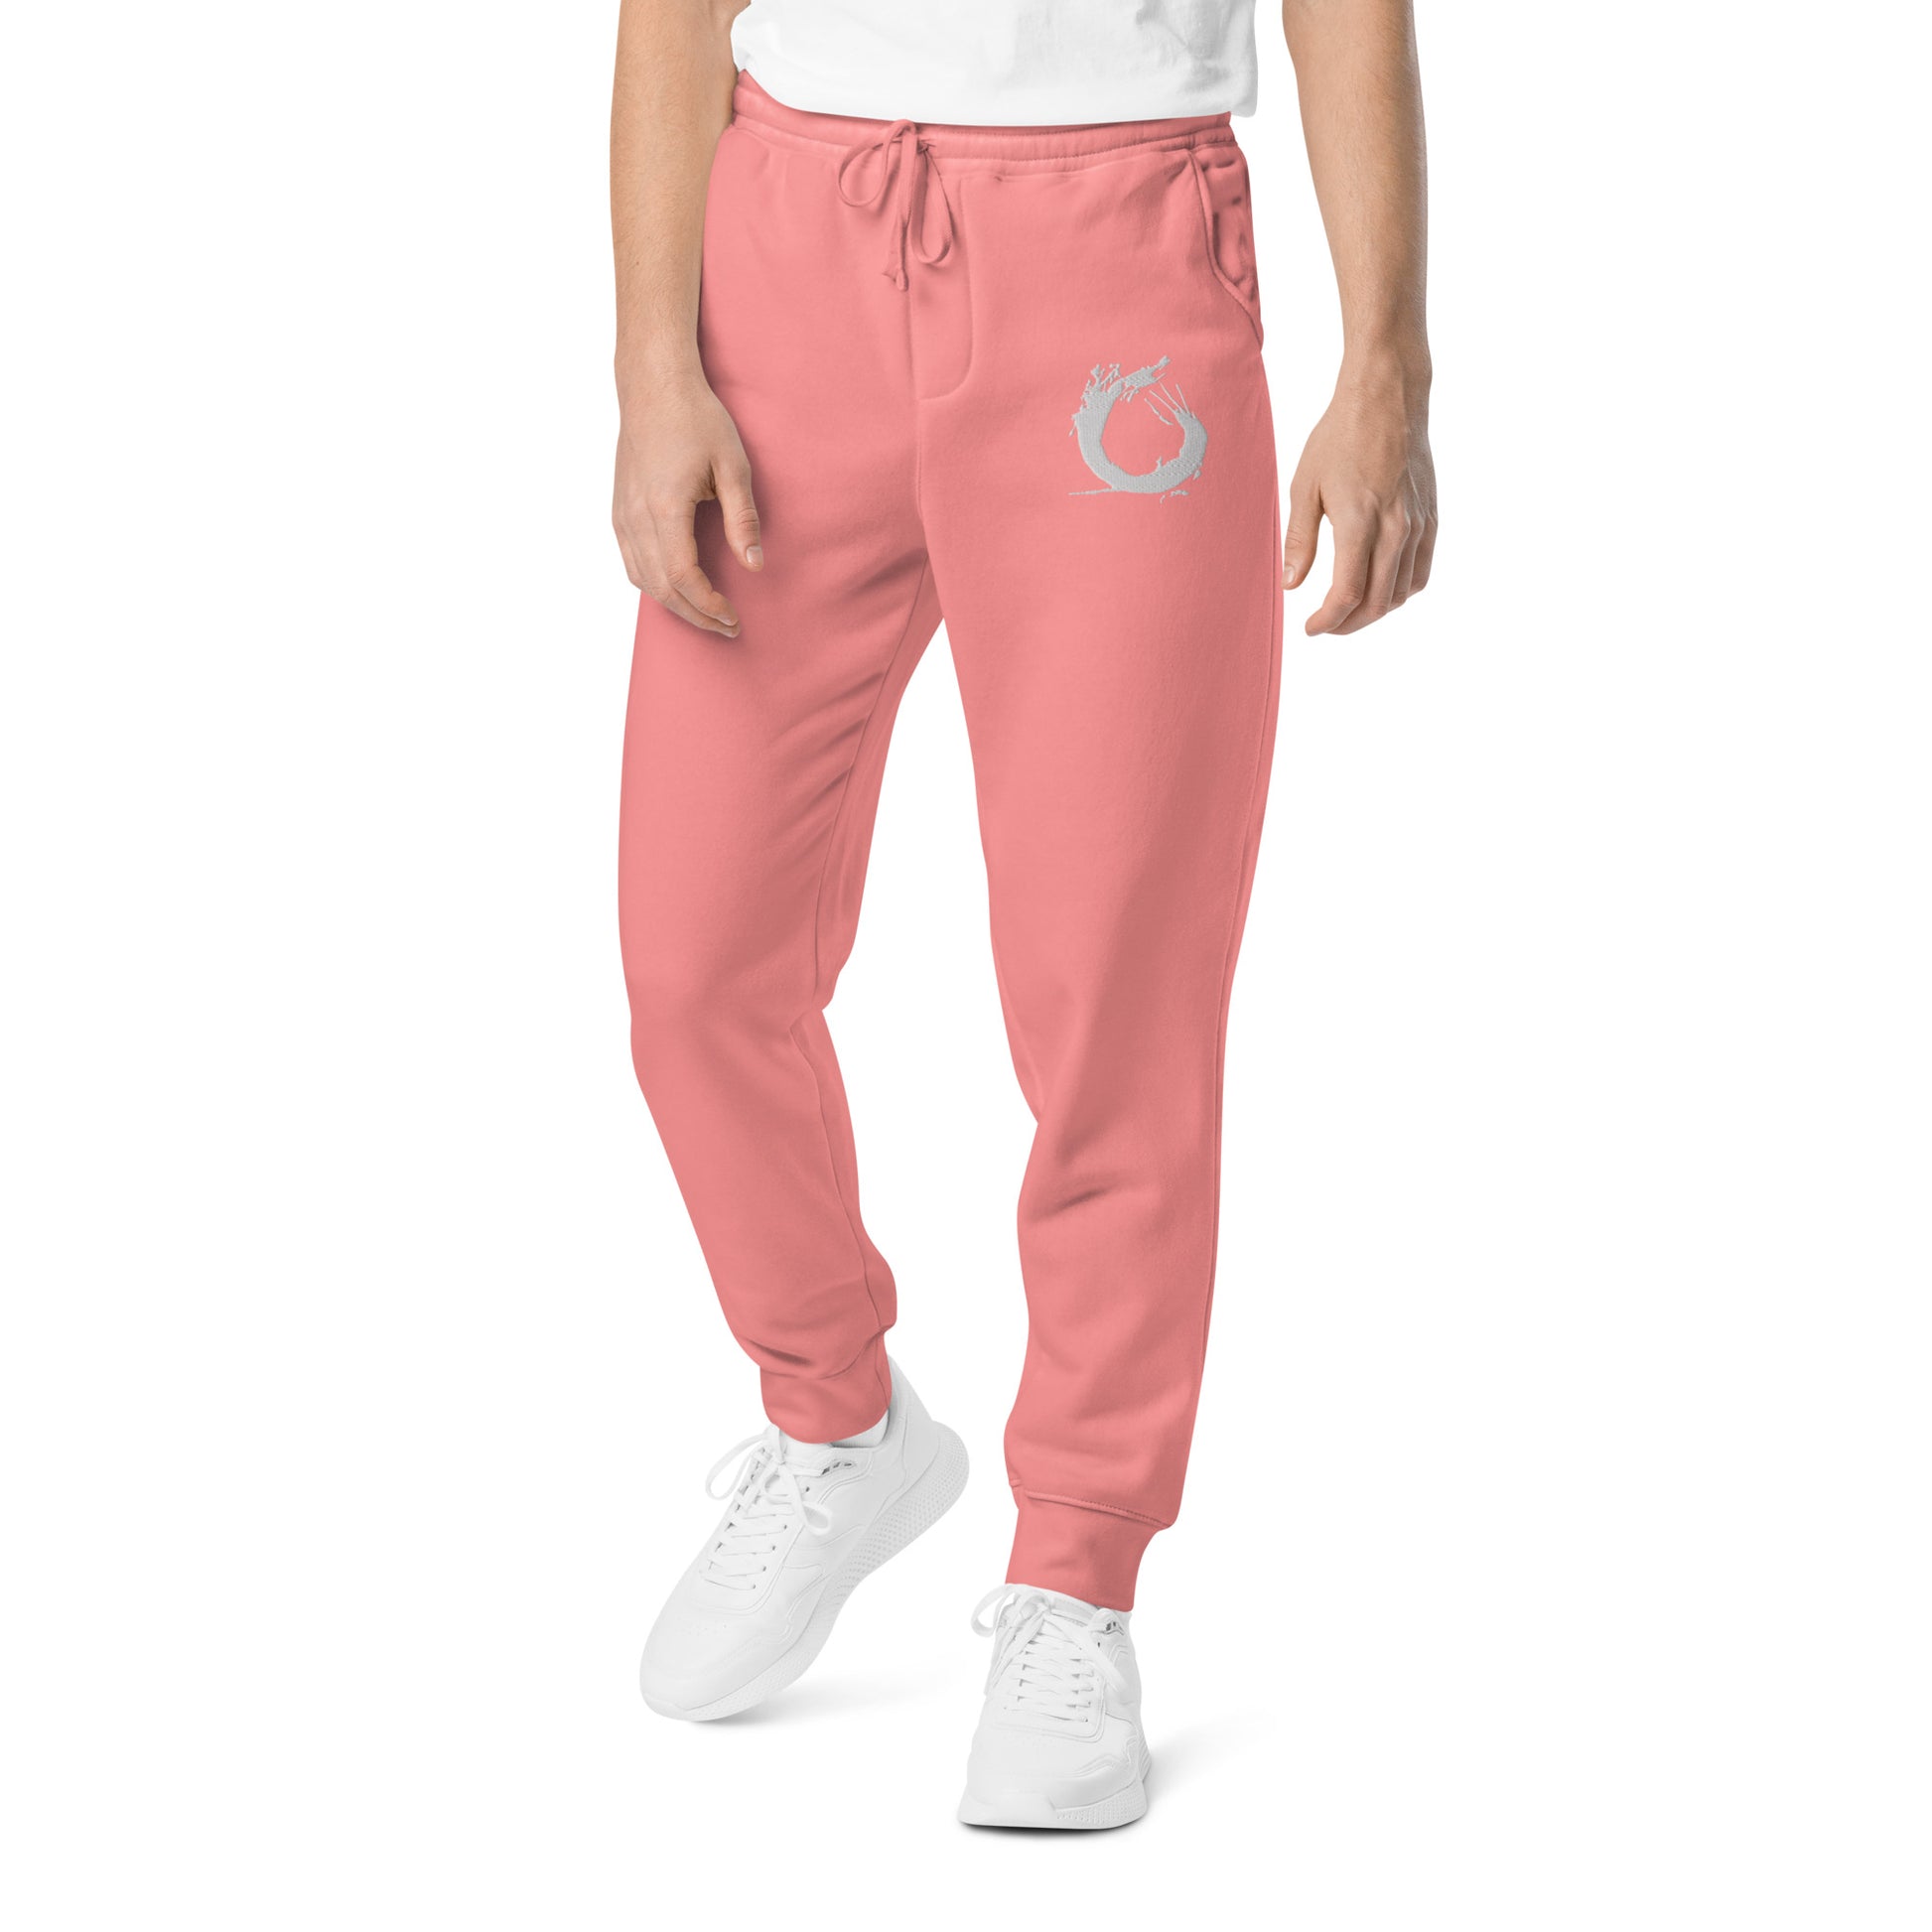 Unisex "Splash" pigment-dyed sweatpants